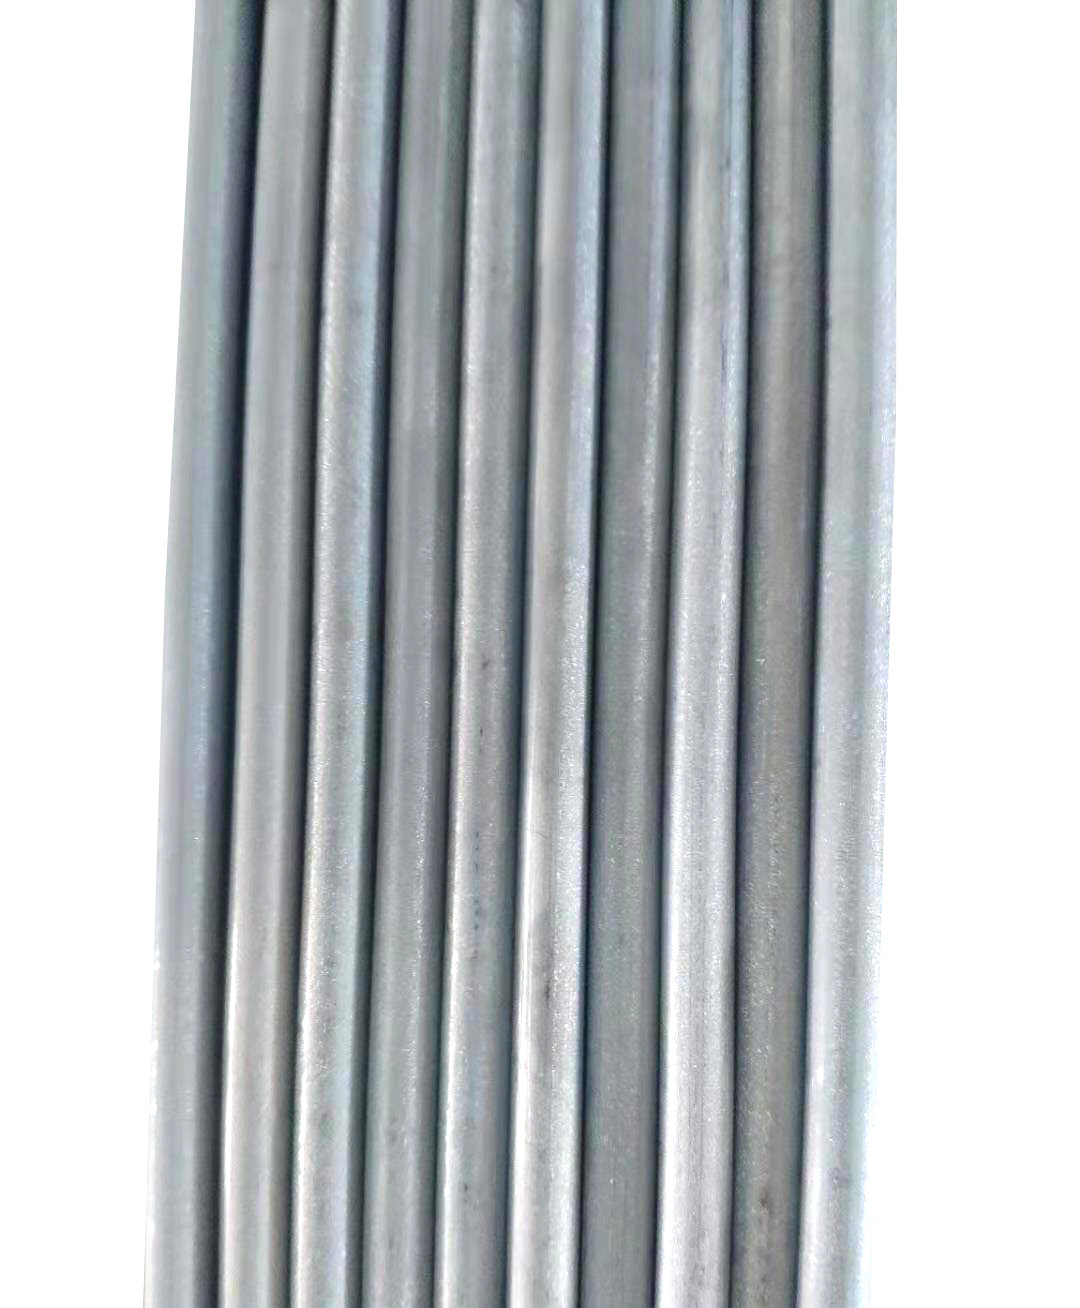 Zinc plated tube